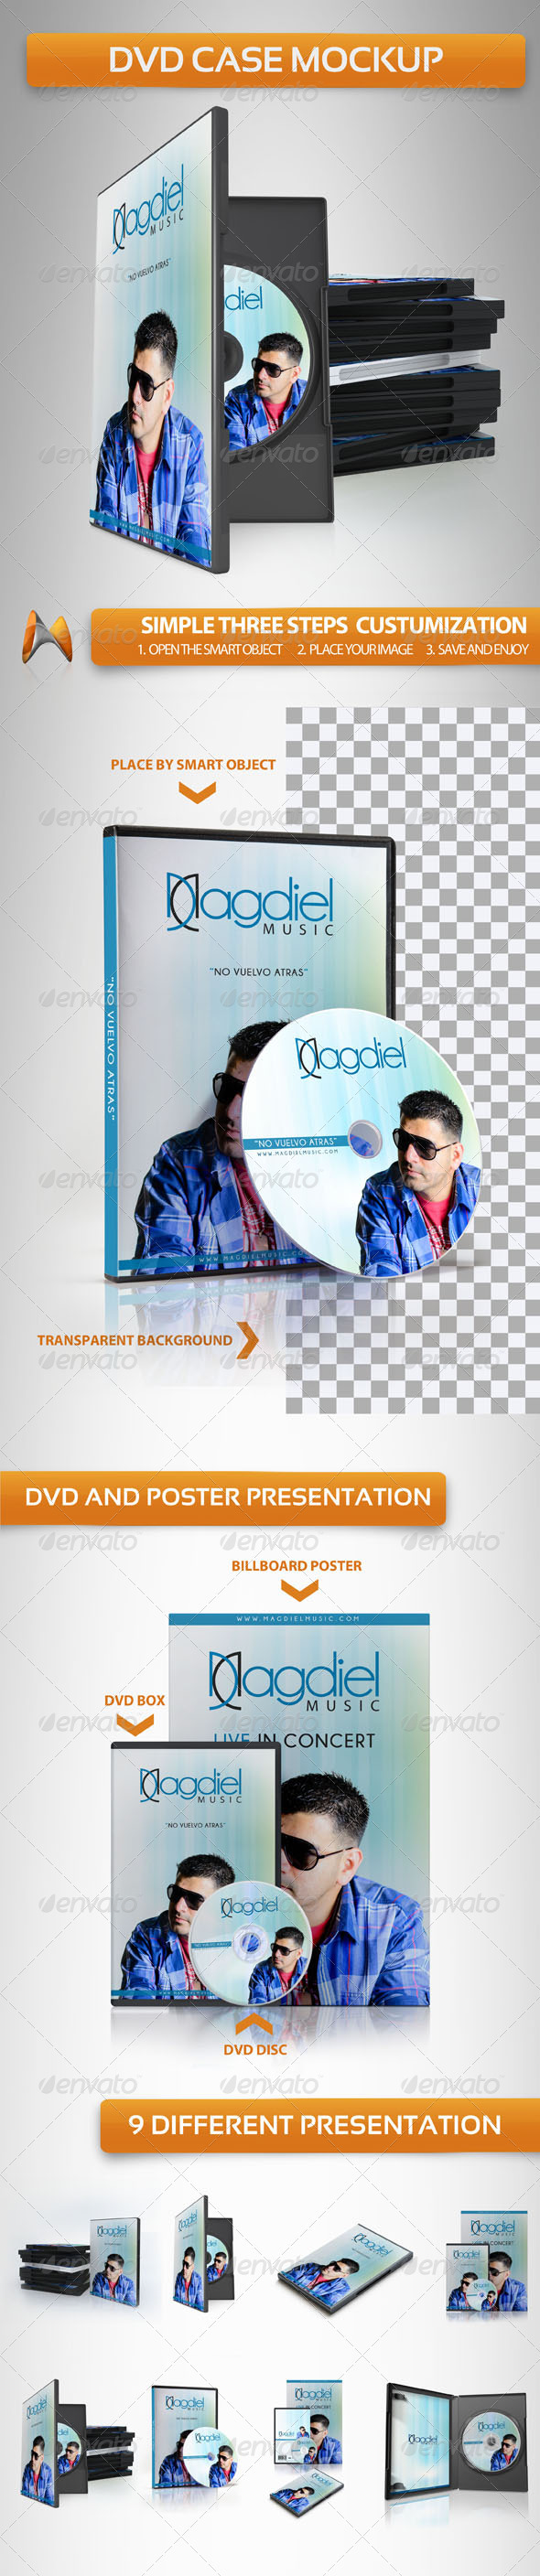 Download Cd Booklet Mockup Download / Download CD Booklet Mockup in PSD Format for Free ... / The best cd ...